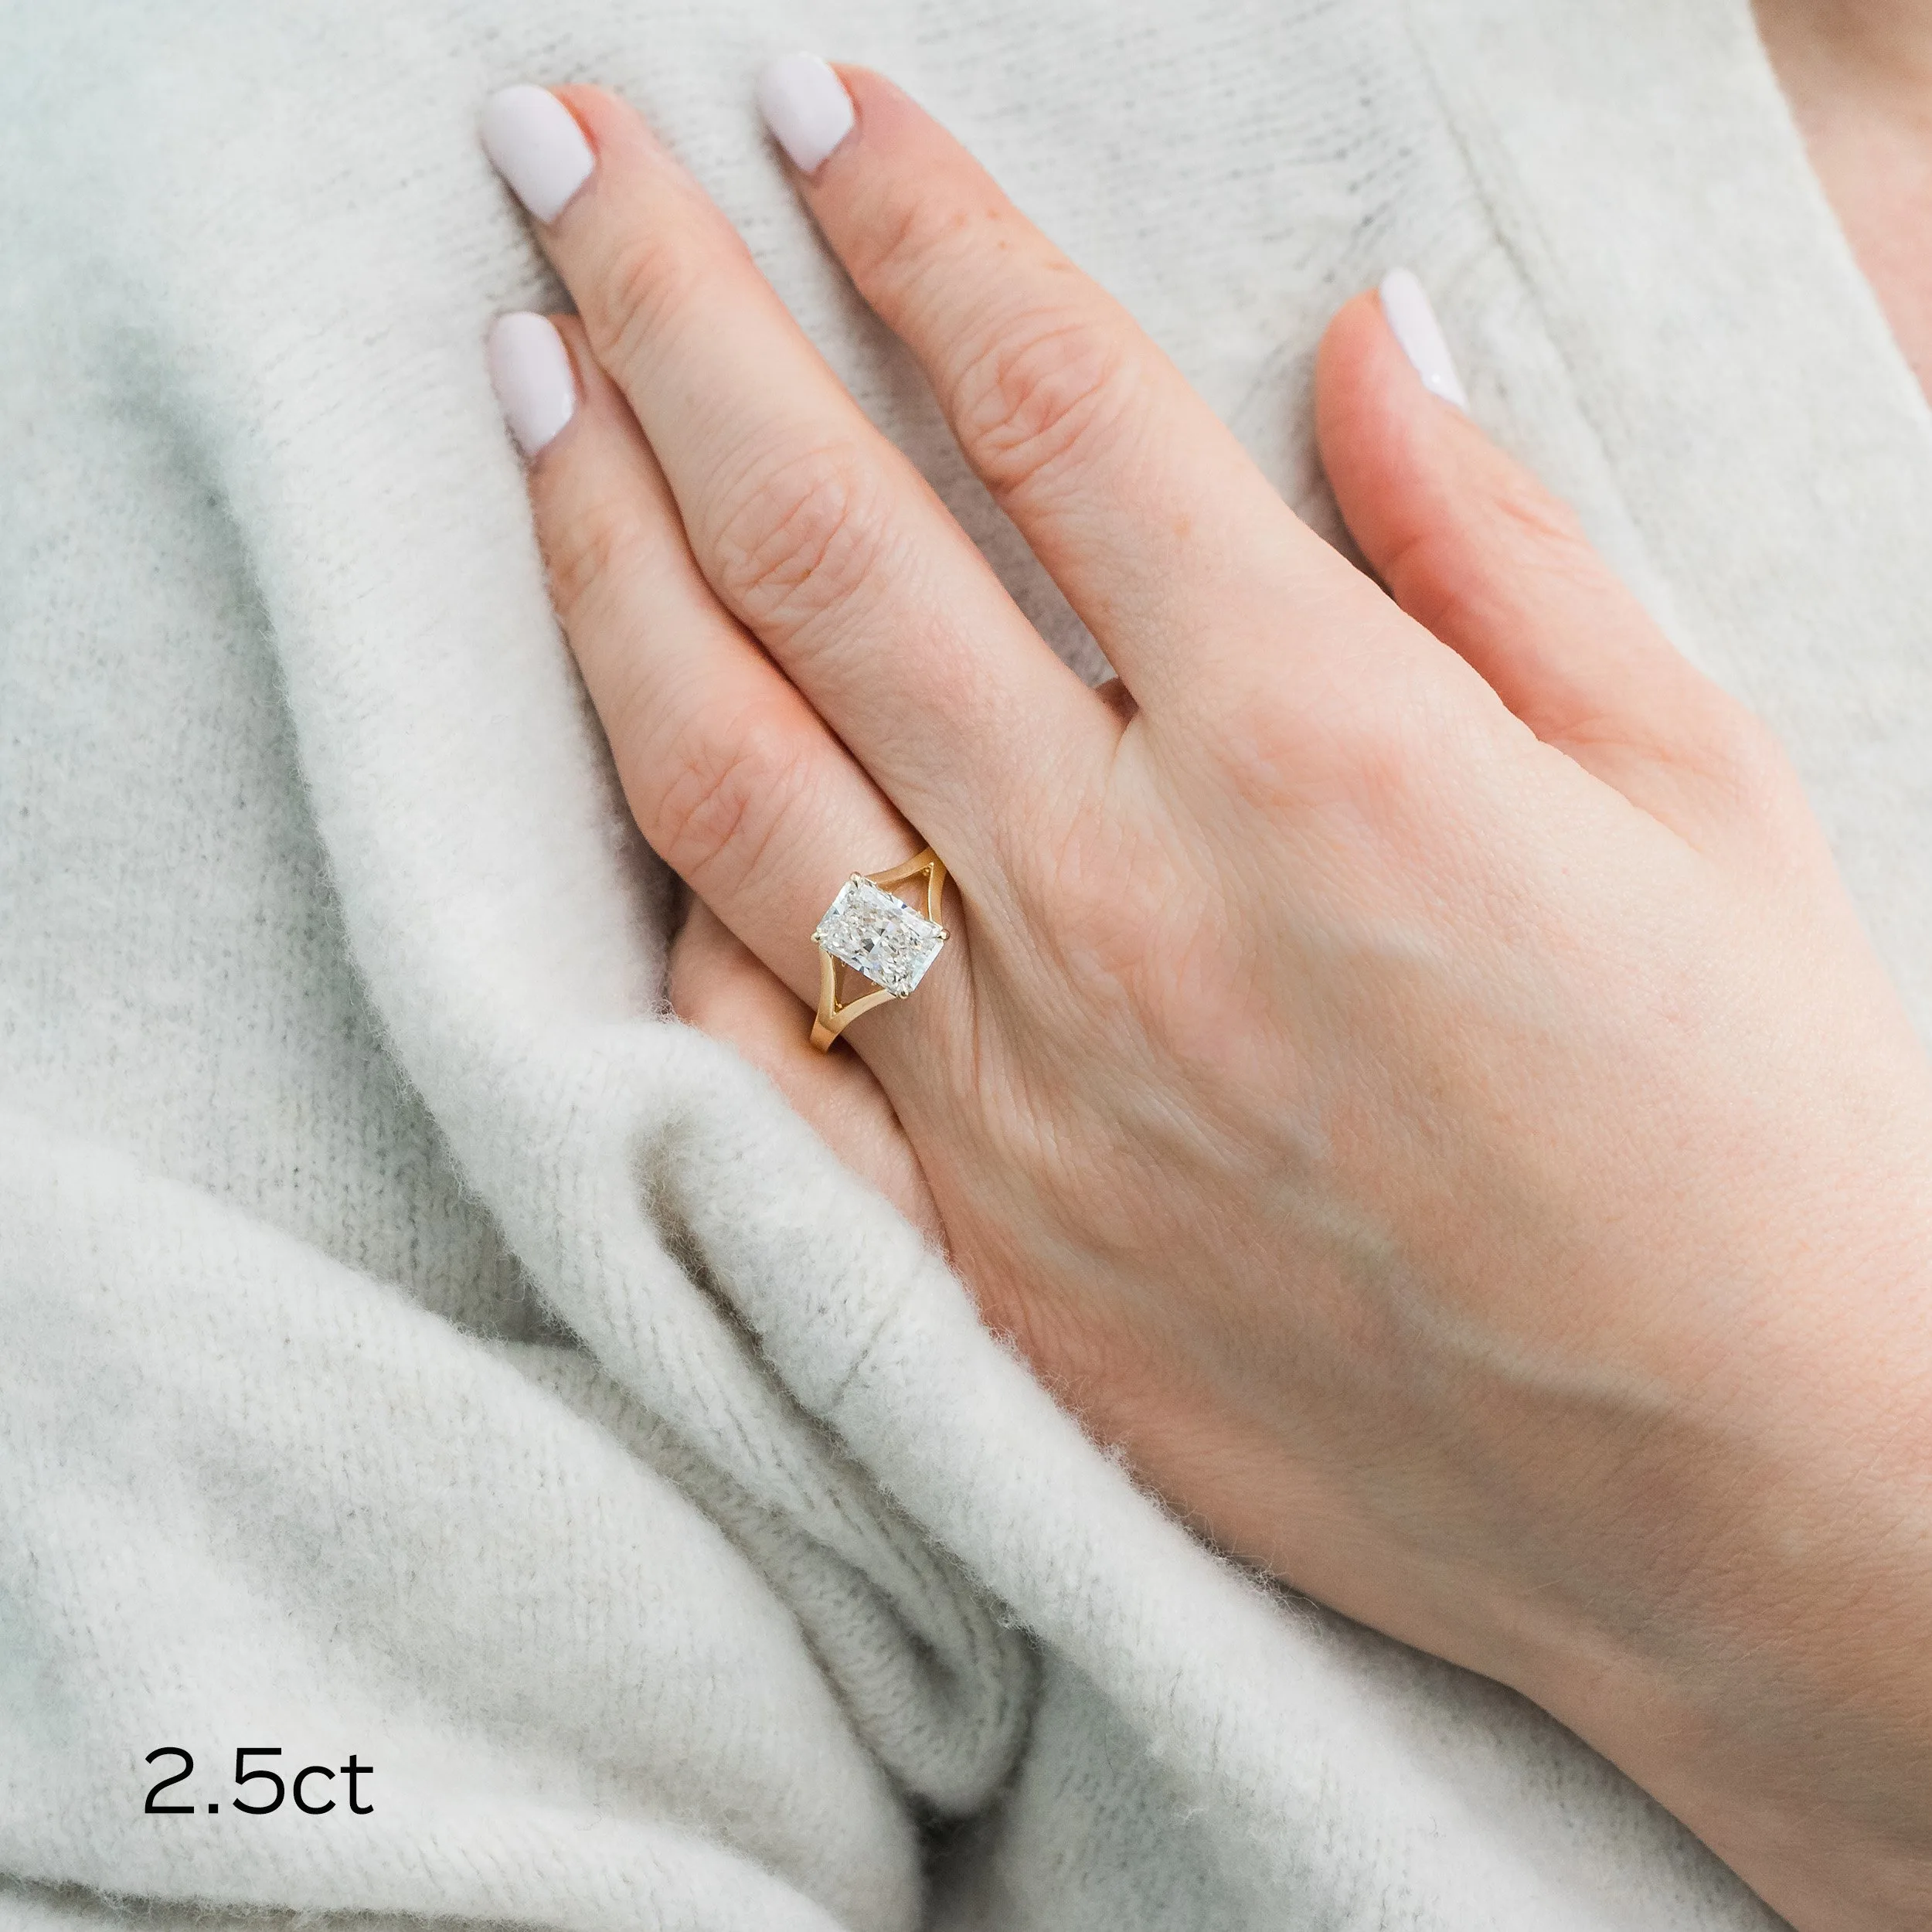 2.5 Carat Lab Created Diamonds set in 18k Yellow Gold Split Shank Solitaire Diamond Engagement Ring (Main View)